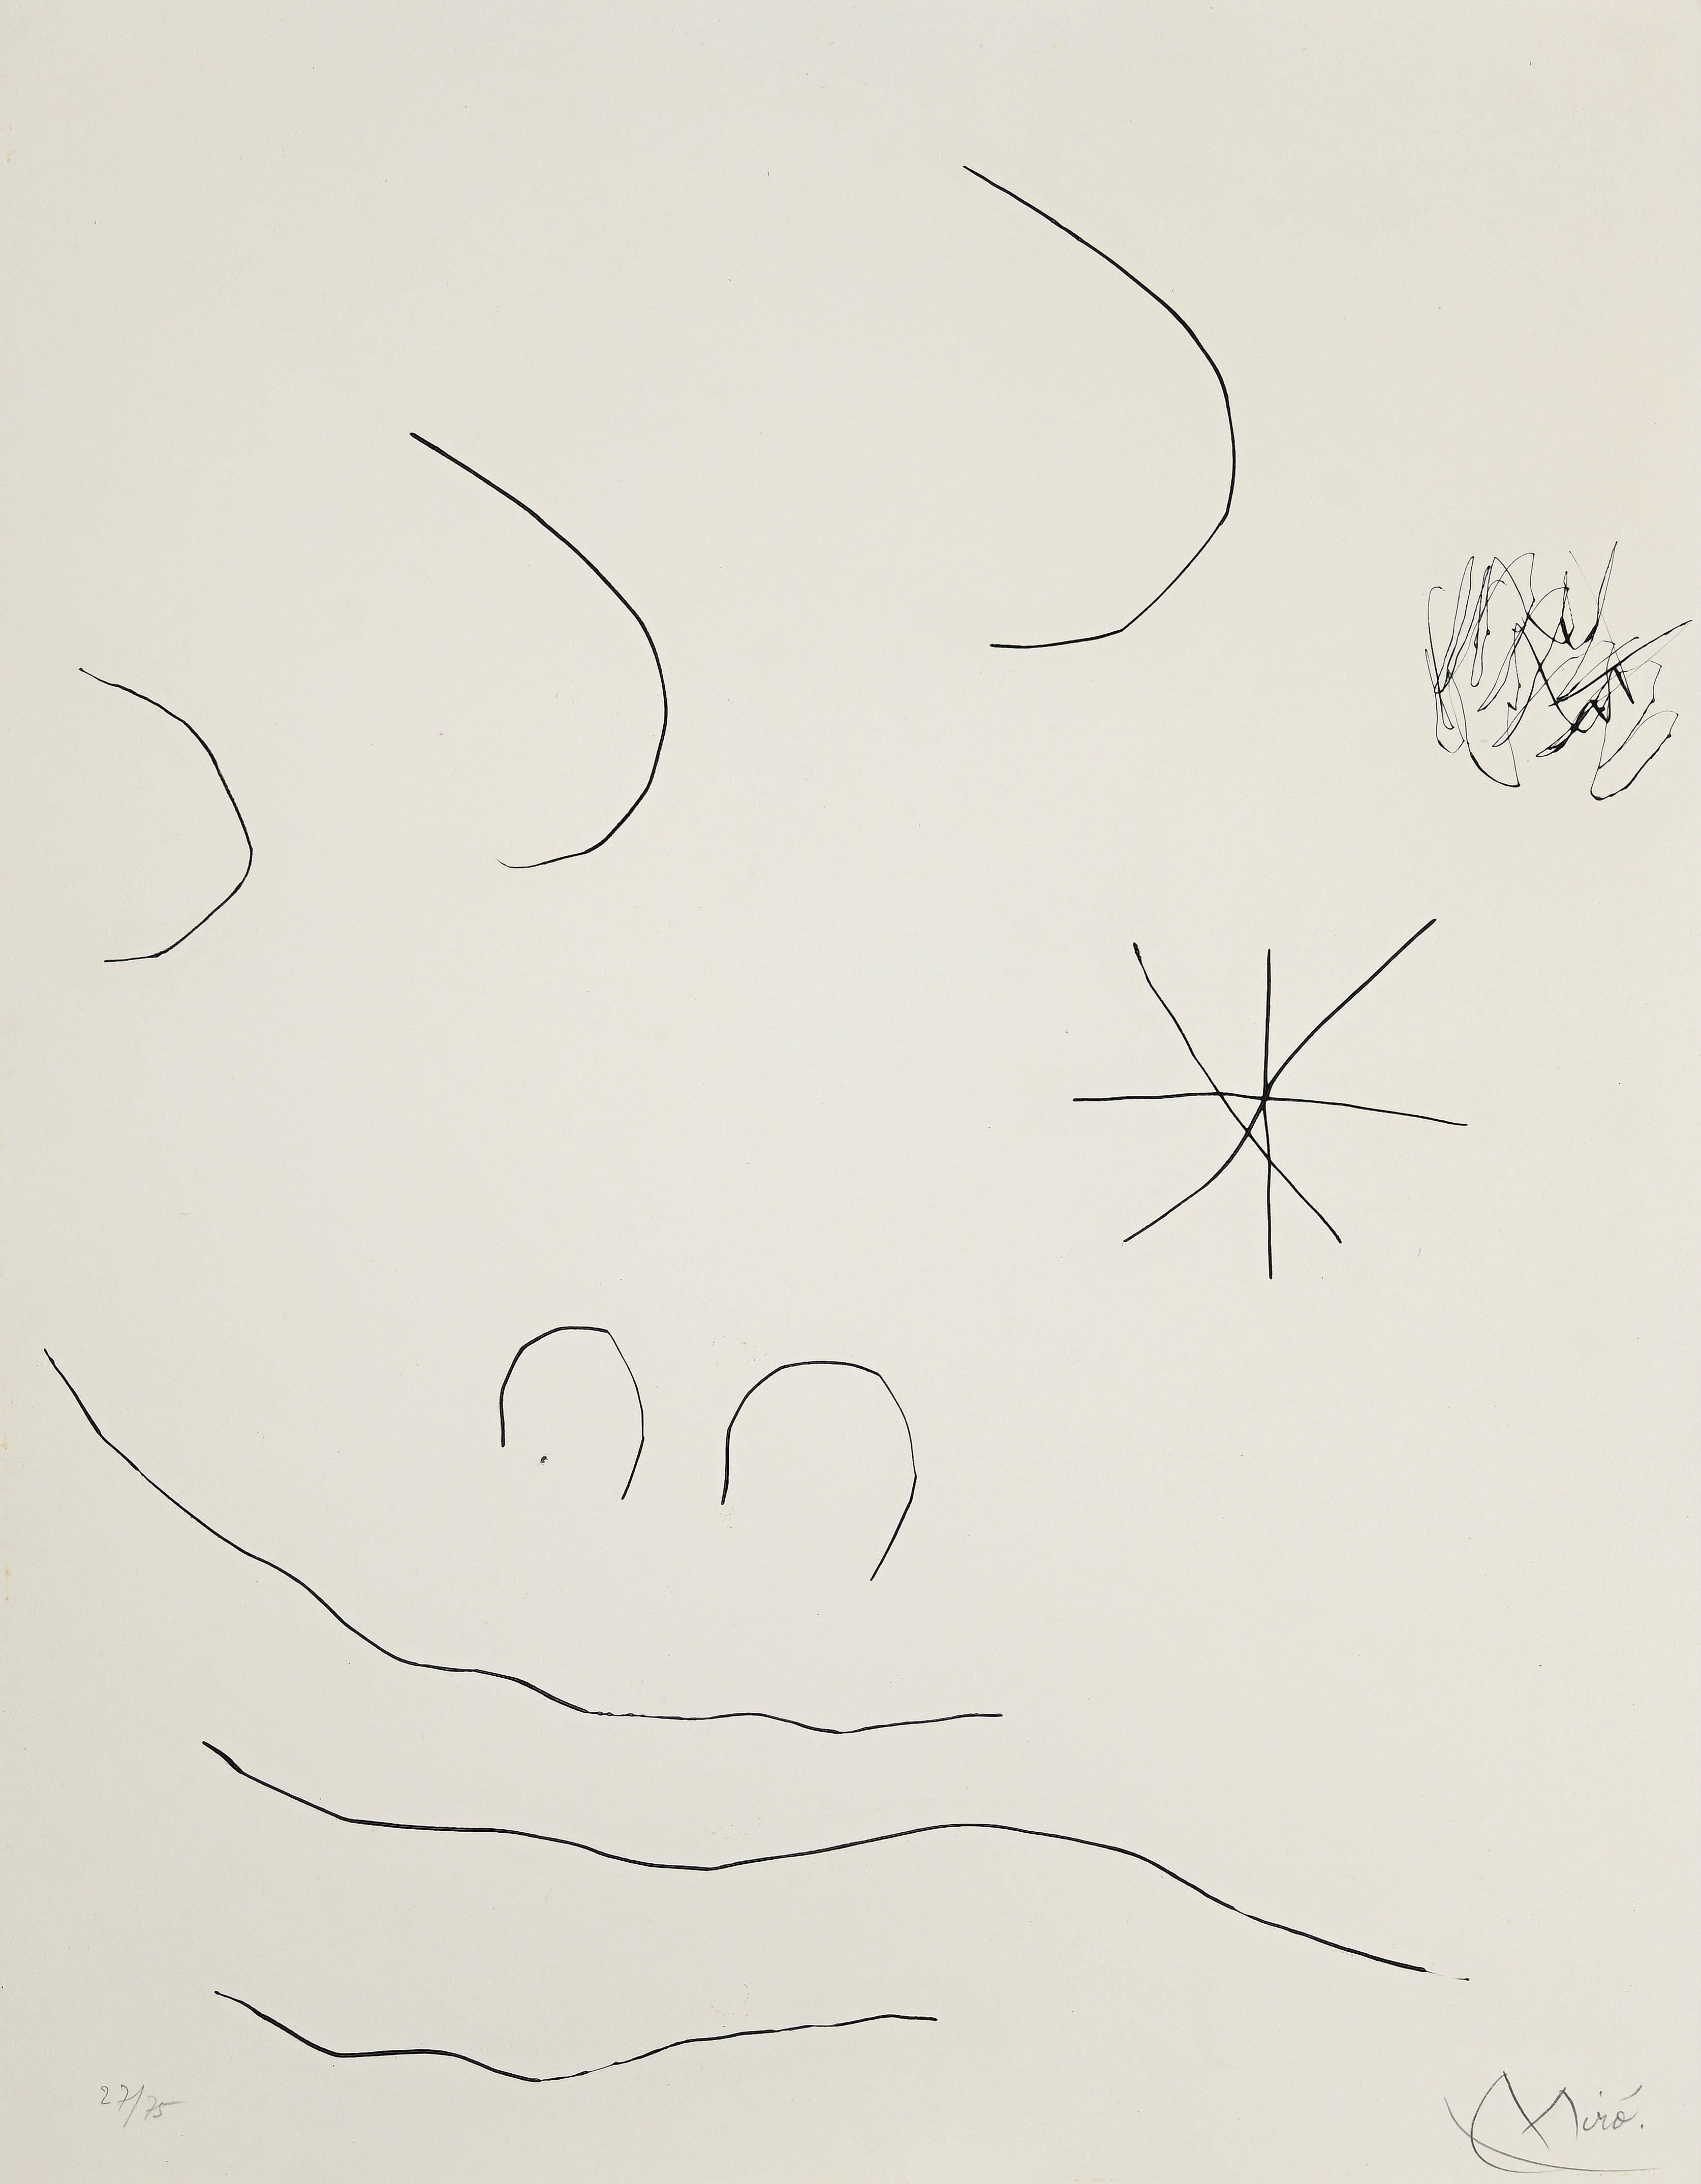 Joan Miró Abstract Print - Journal D'Un Graveur - Vol. 2 Plate 15 - Drypoint by Joan Mirò - 1975